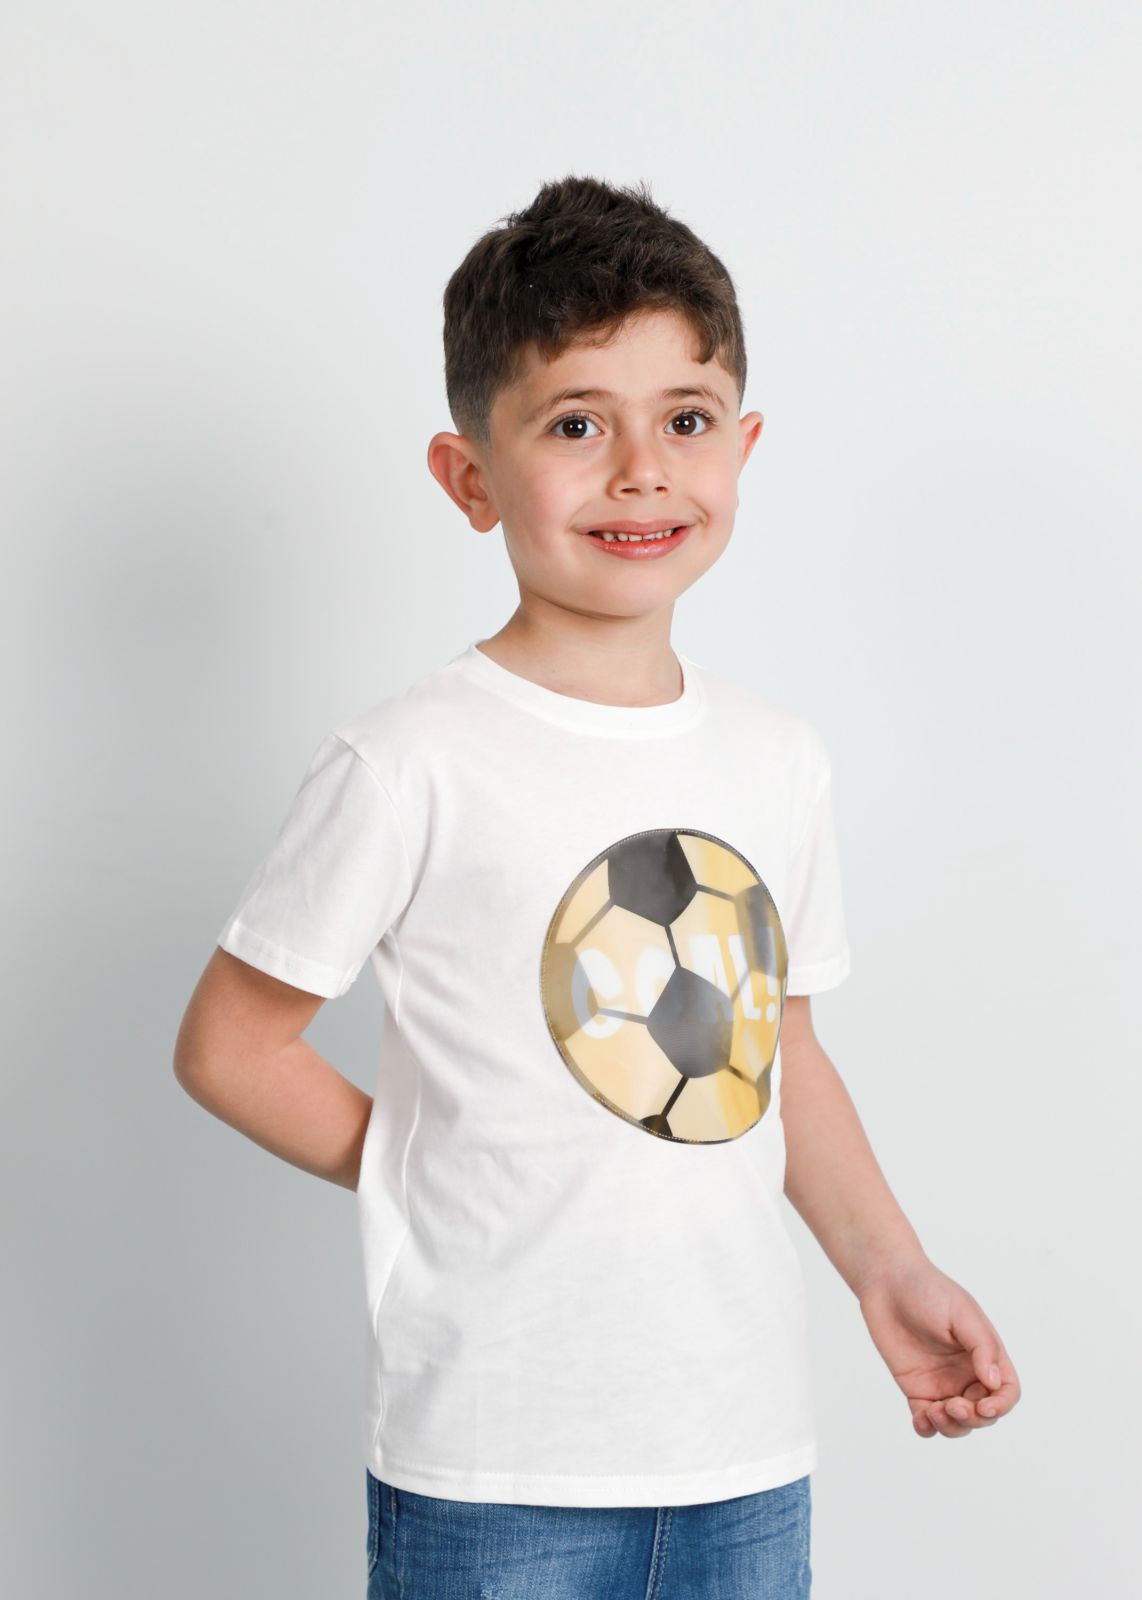 Kids' Boy's Football “Goal” Printed T-Shirt, Lafamilia Summer  Sale, 61223160172